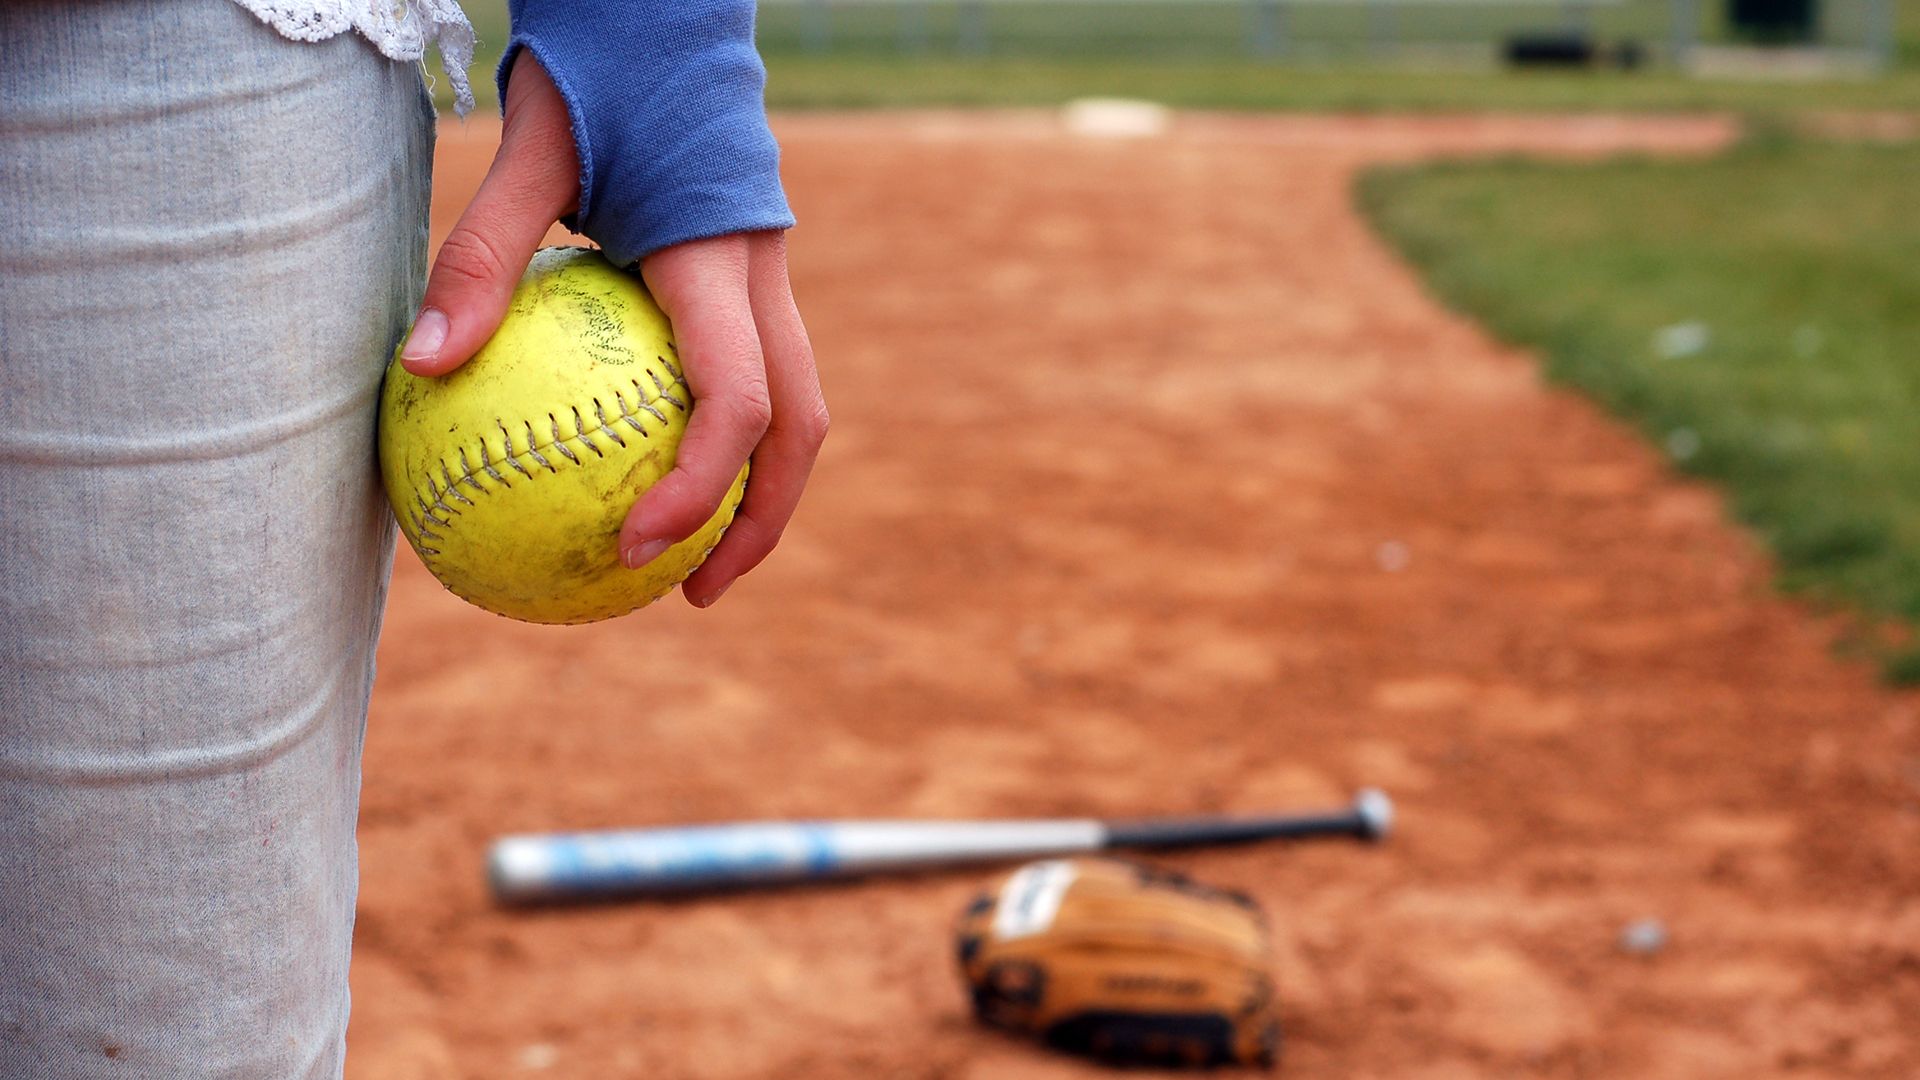 Snapchat post ends World Series bid for girls' softball team